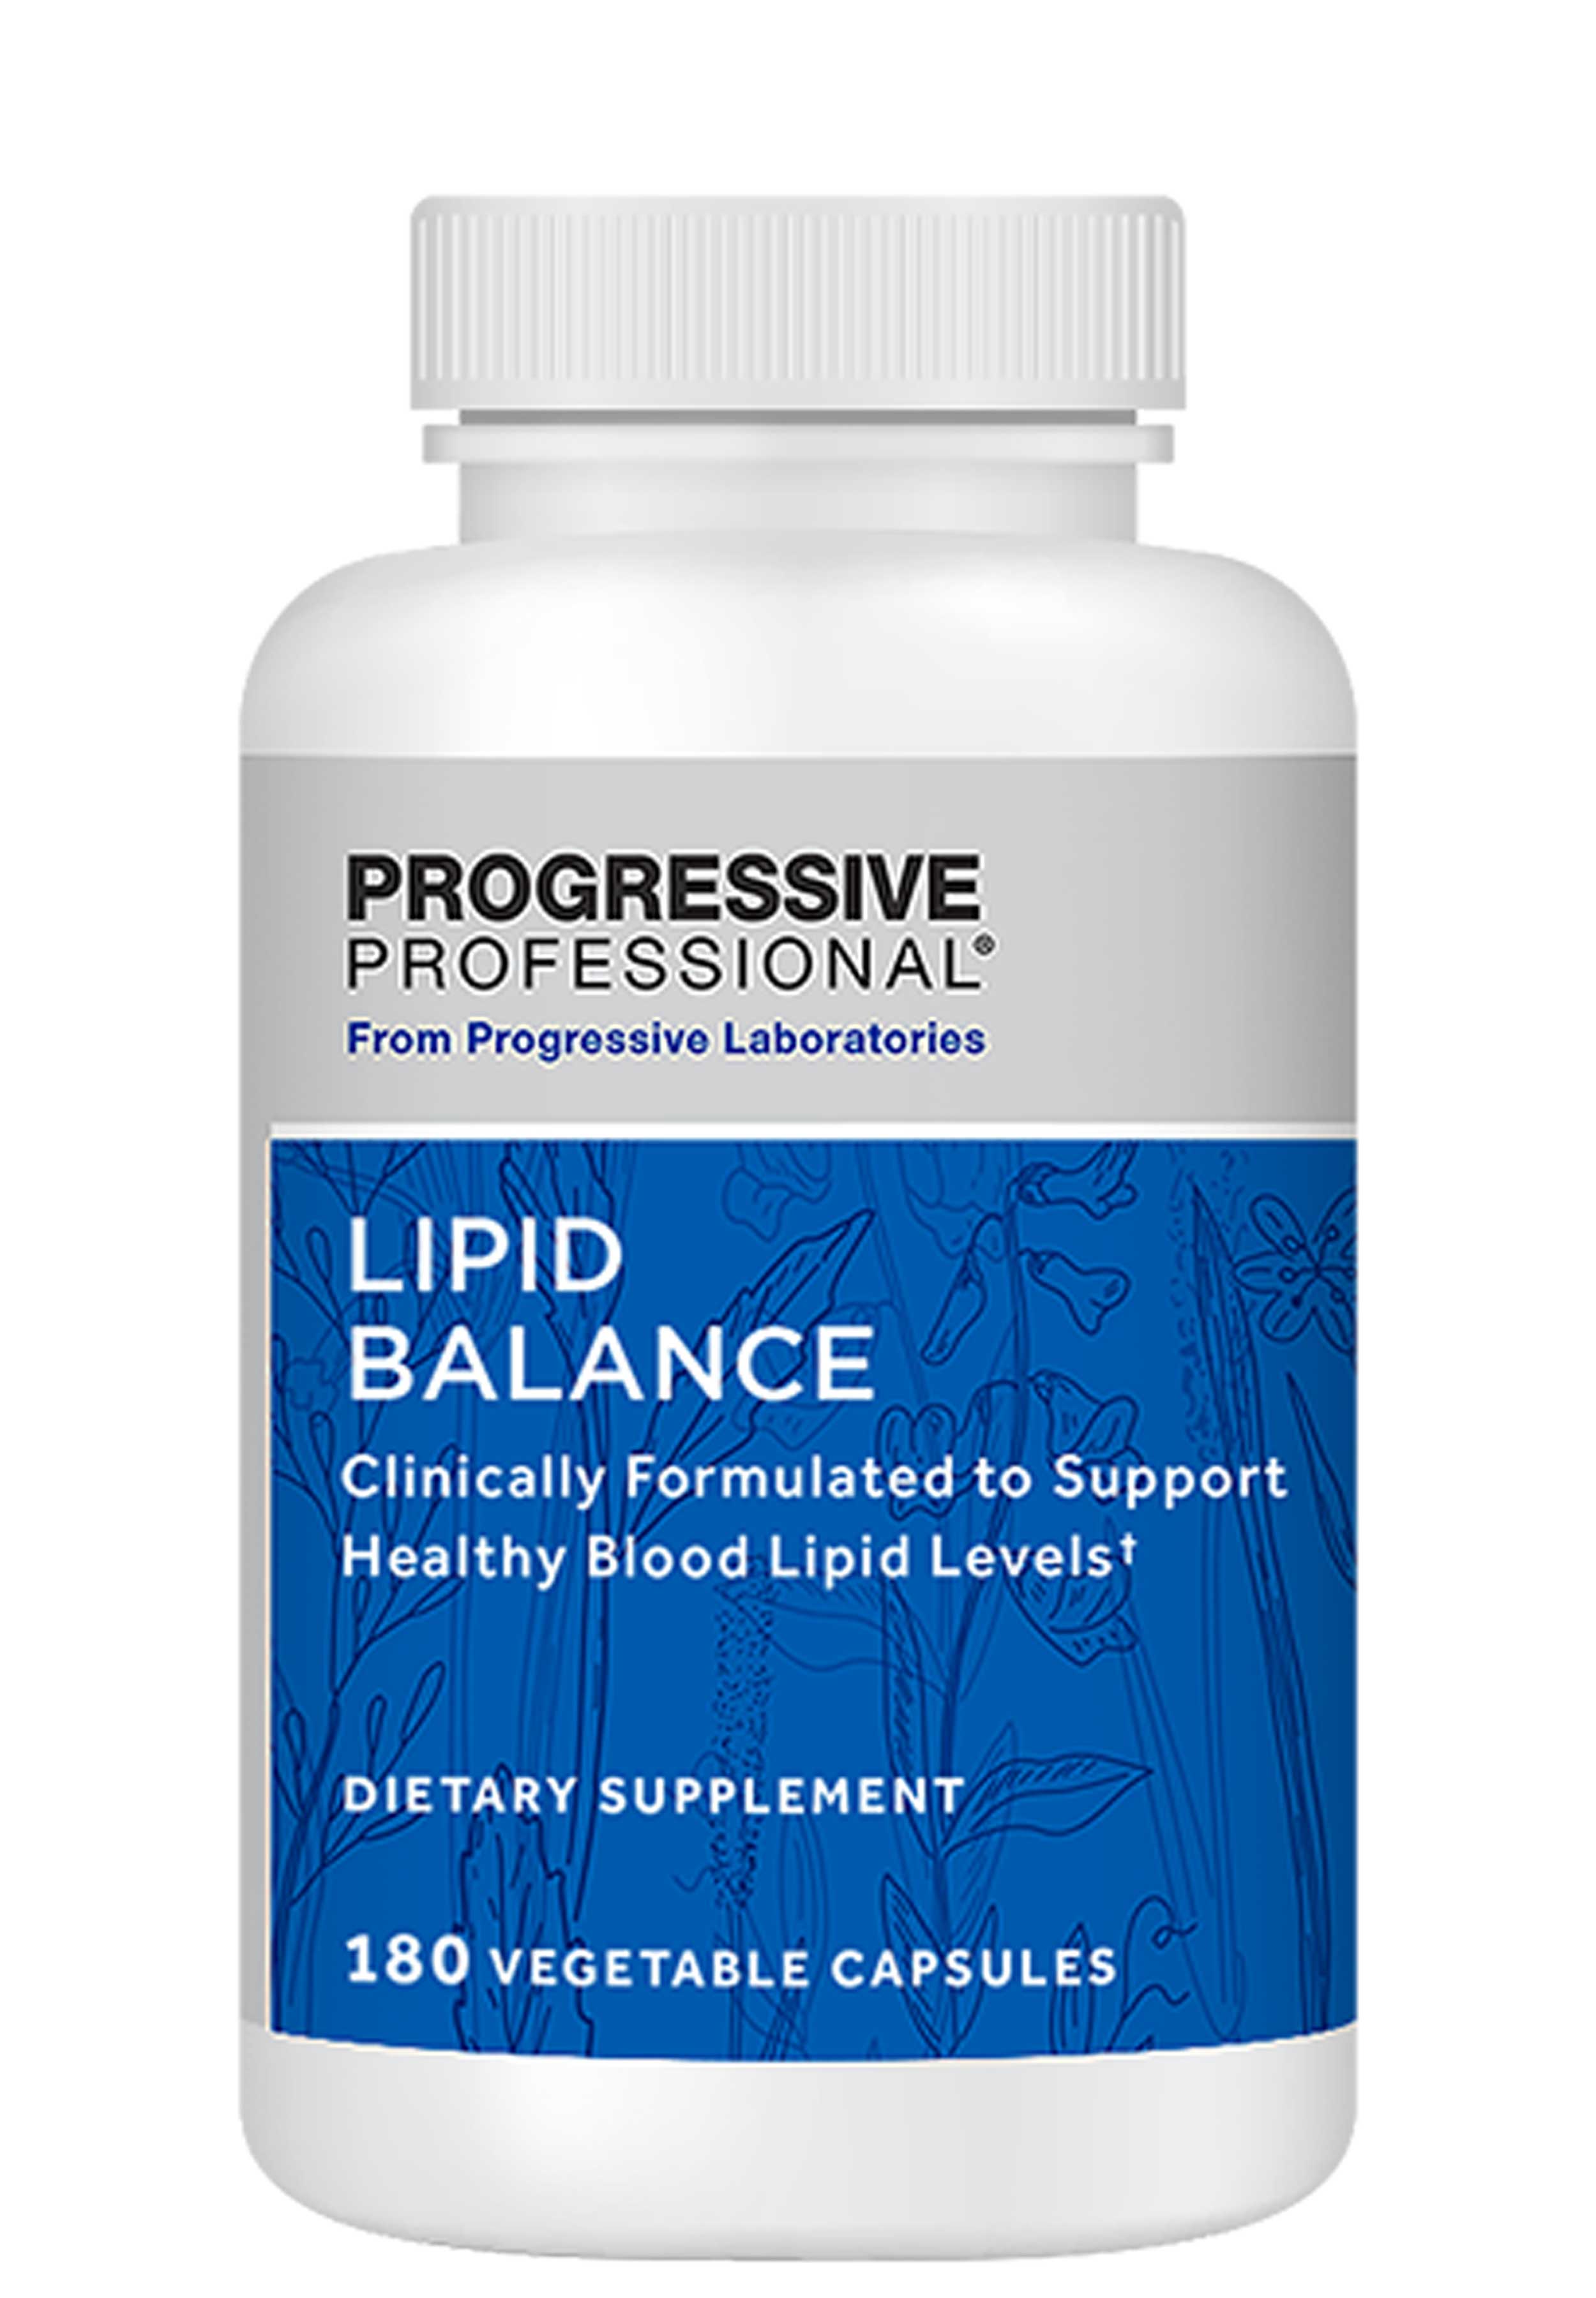 Progressive Laboratories Lipid Balance